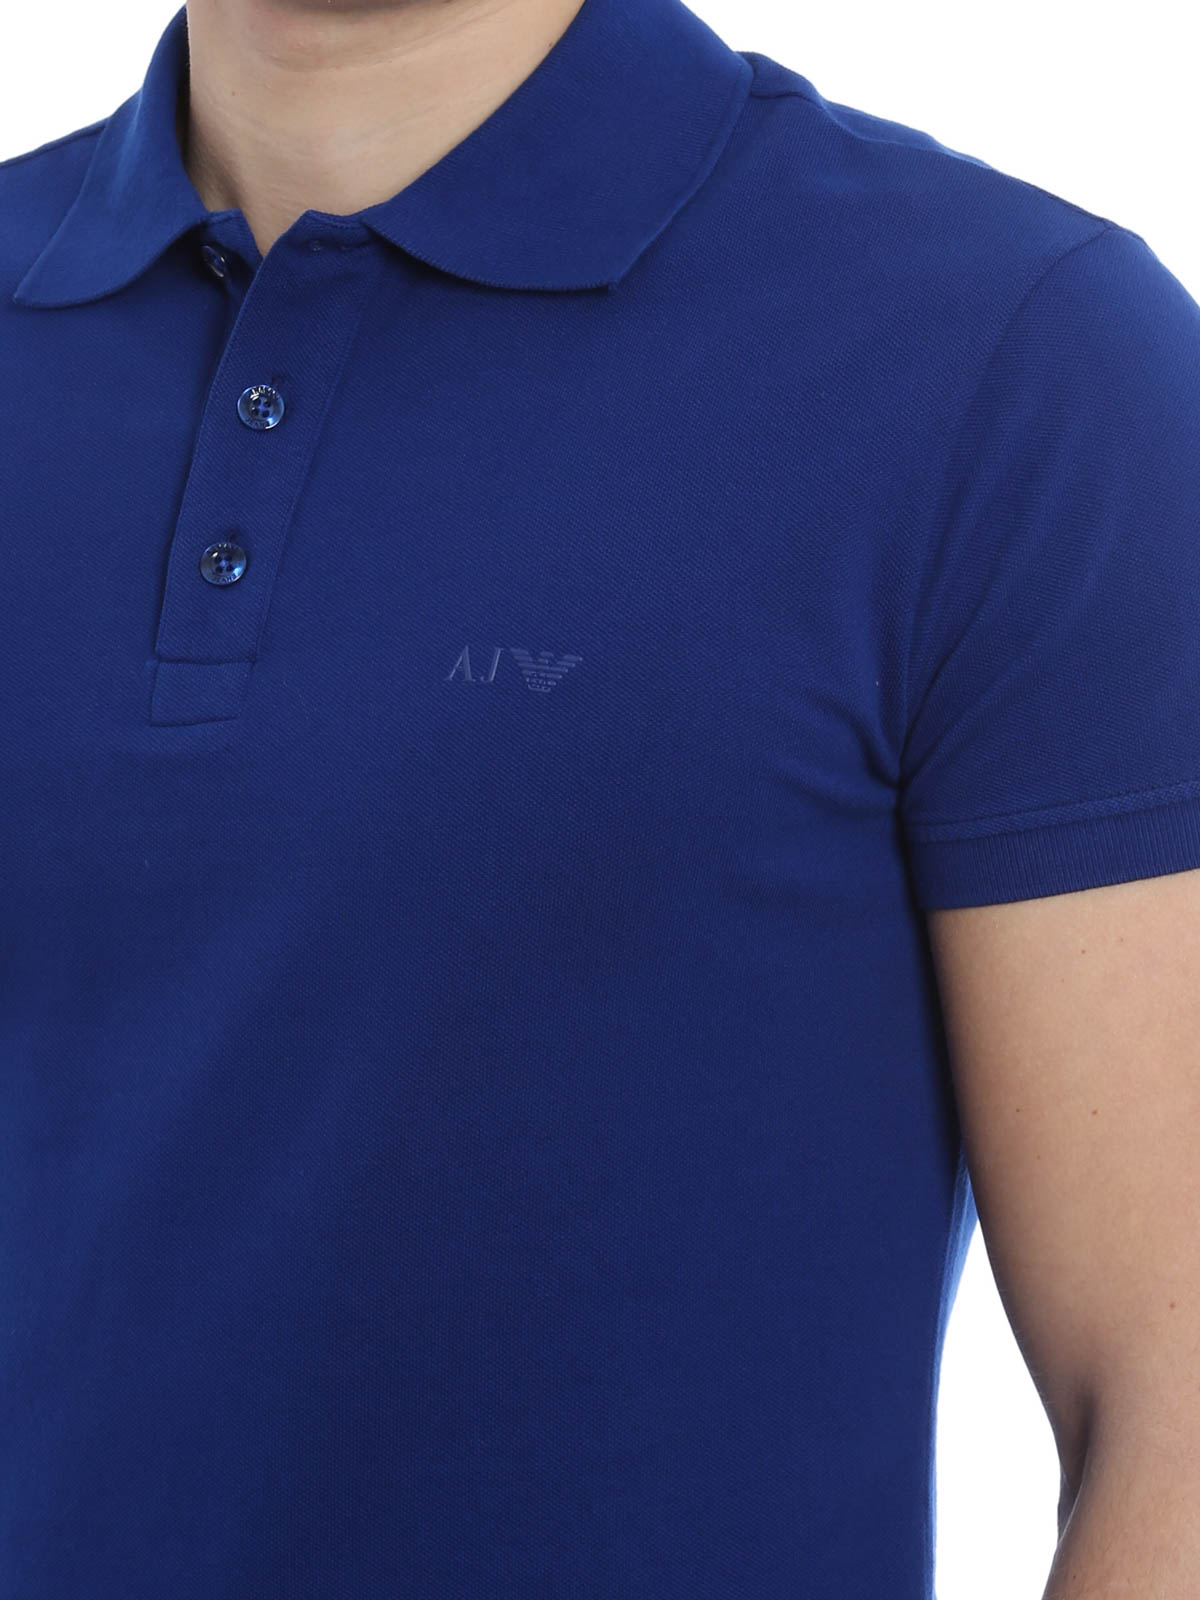 Mail decaan kroeg Polo shirts Armani Jeans - AJ Polo shirt - 06M9908 | Shop online at iKRIX